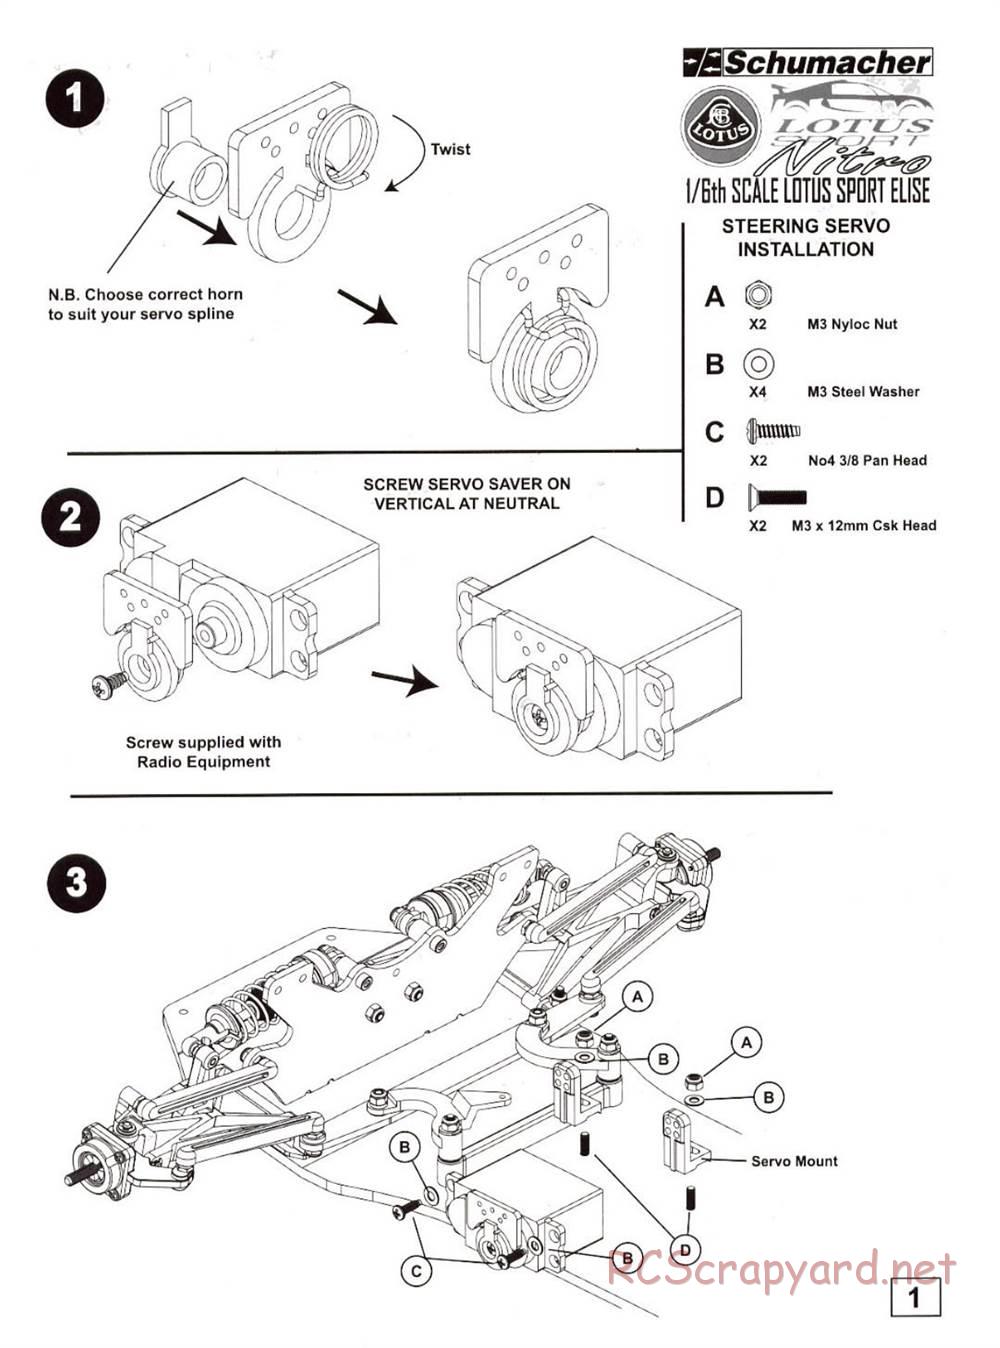 Schumacher - Big 6 Lotus Nitro - Manual - Page 3